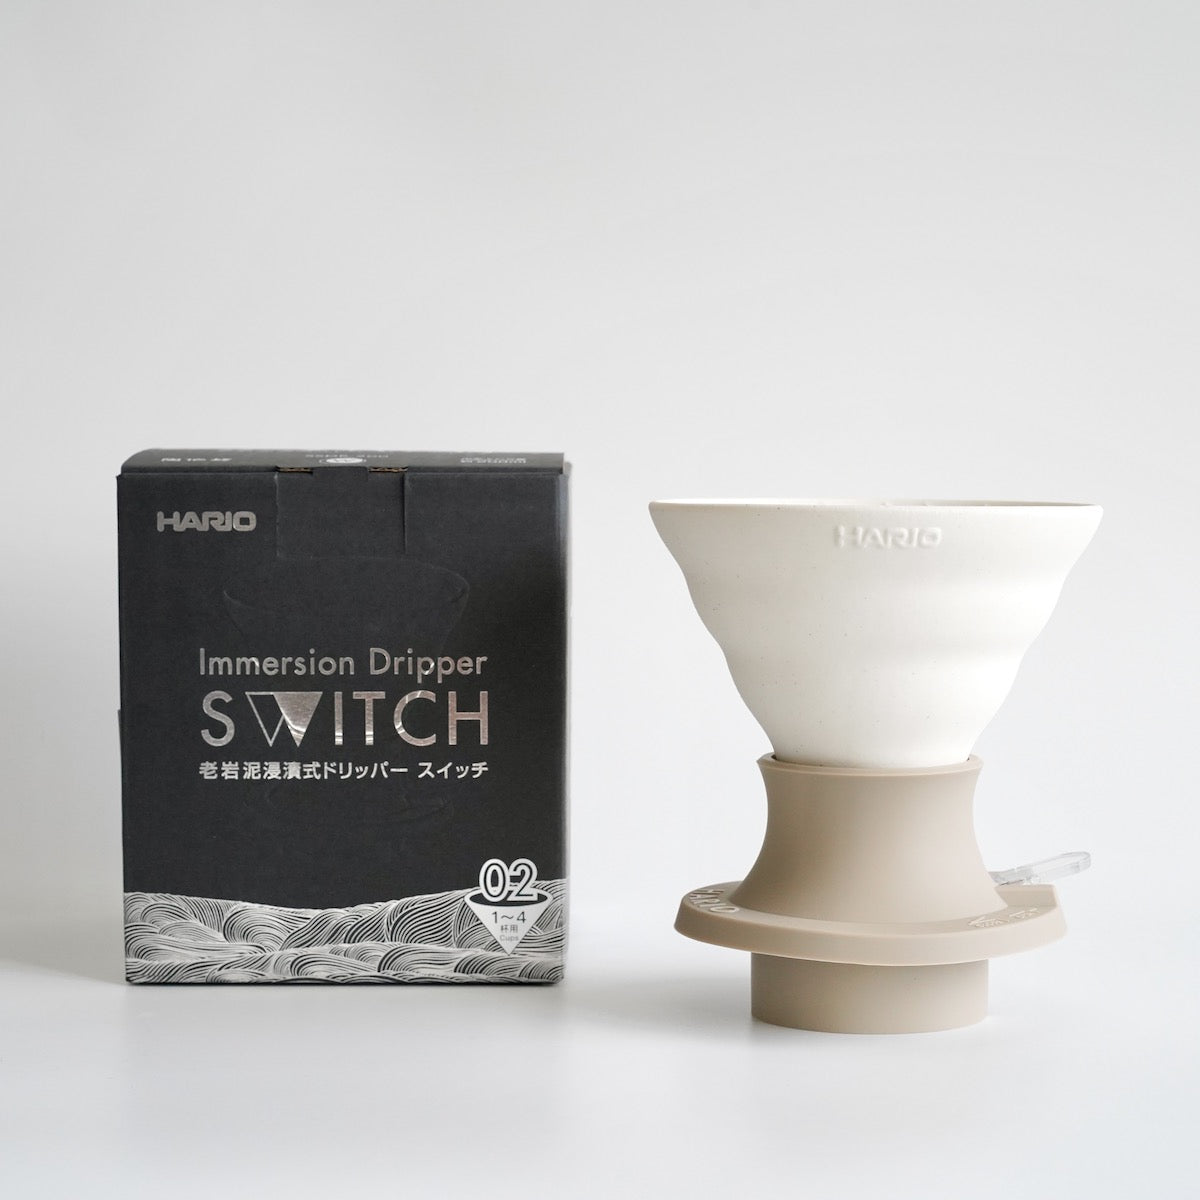 HARIO x Lin's Ceramics Studio Swtich Immersion Coffee Dripper Pakcaging